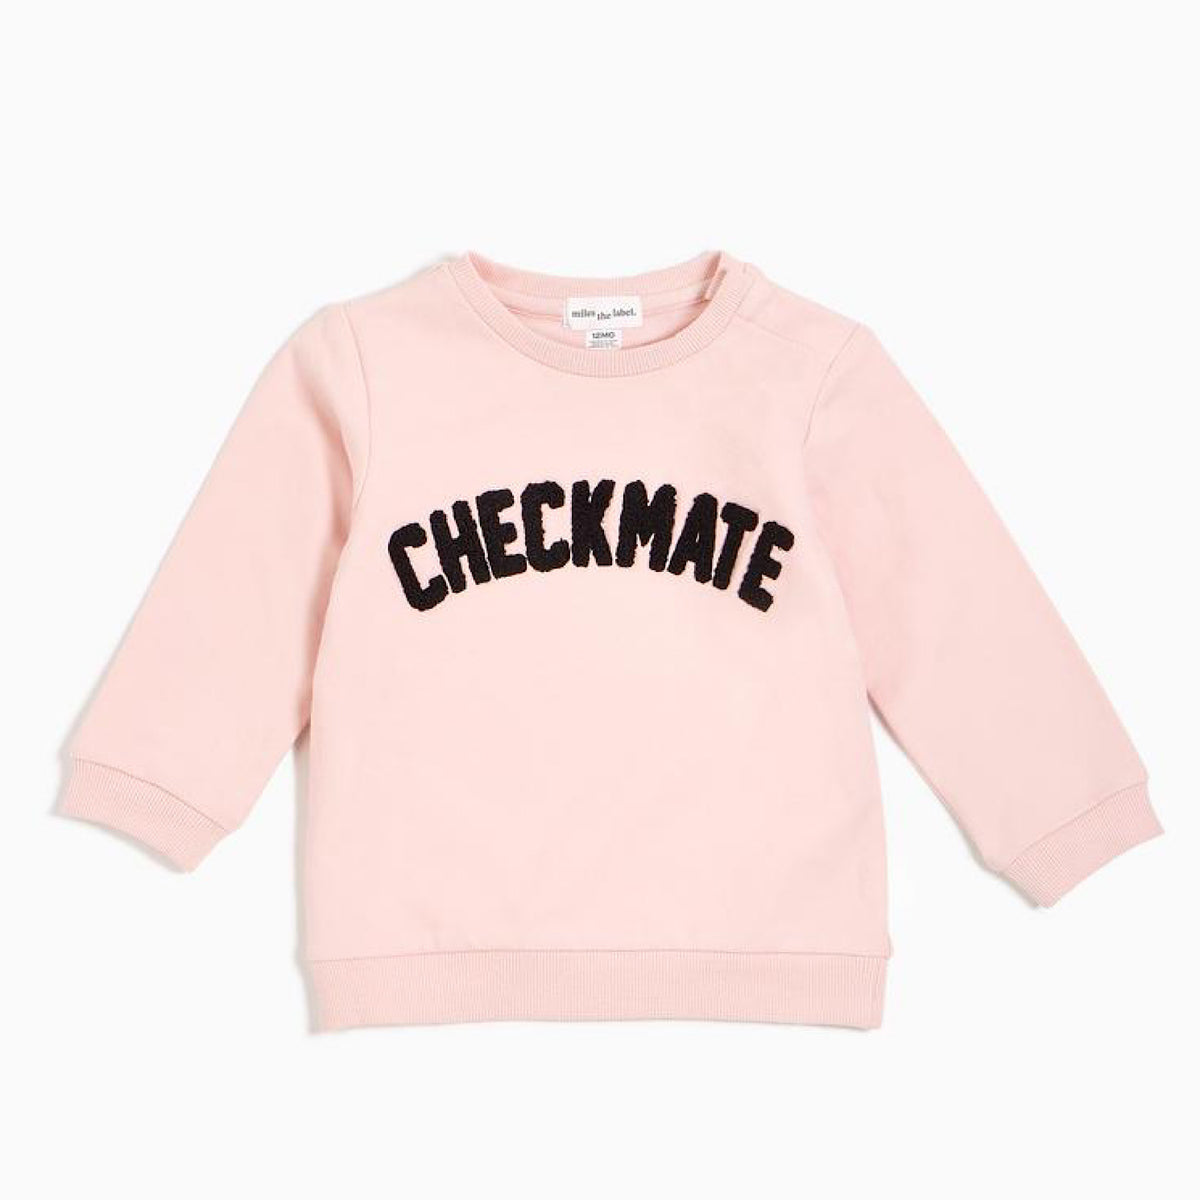 Checkmate Sweatshirt, Pink